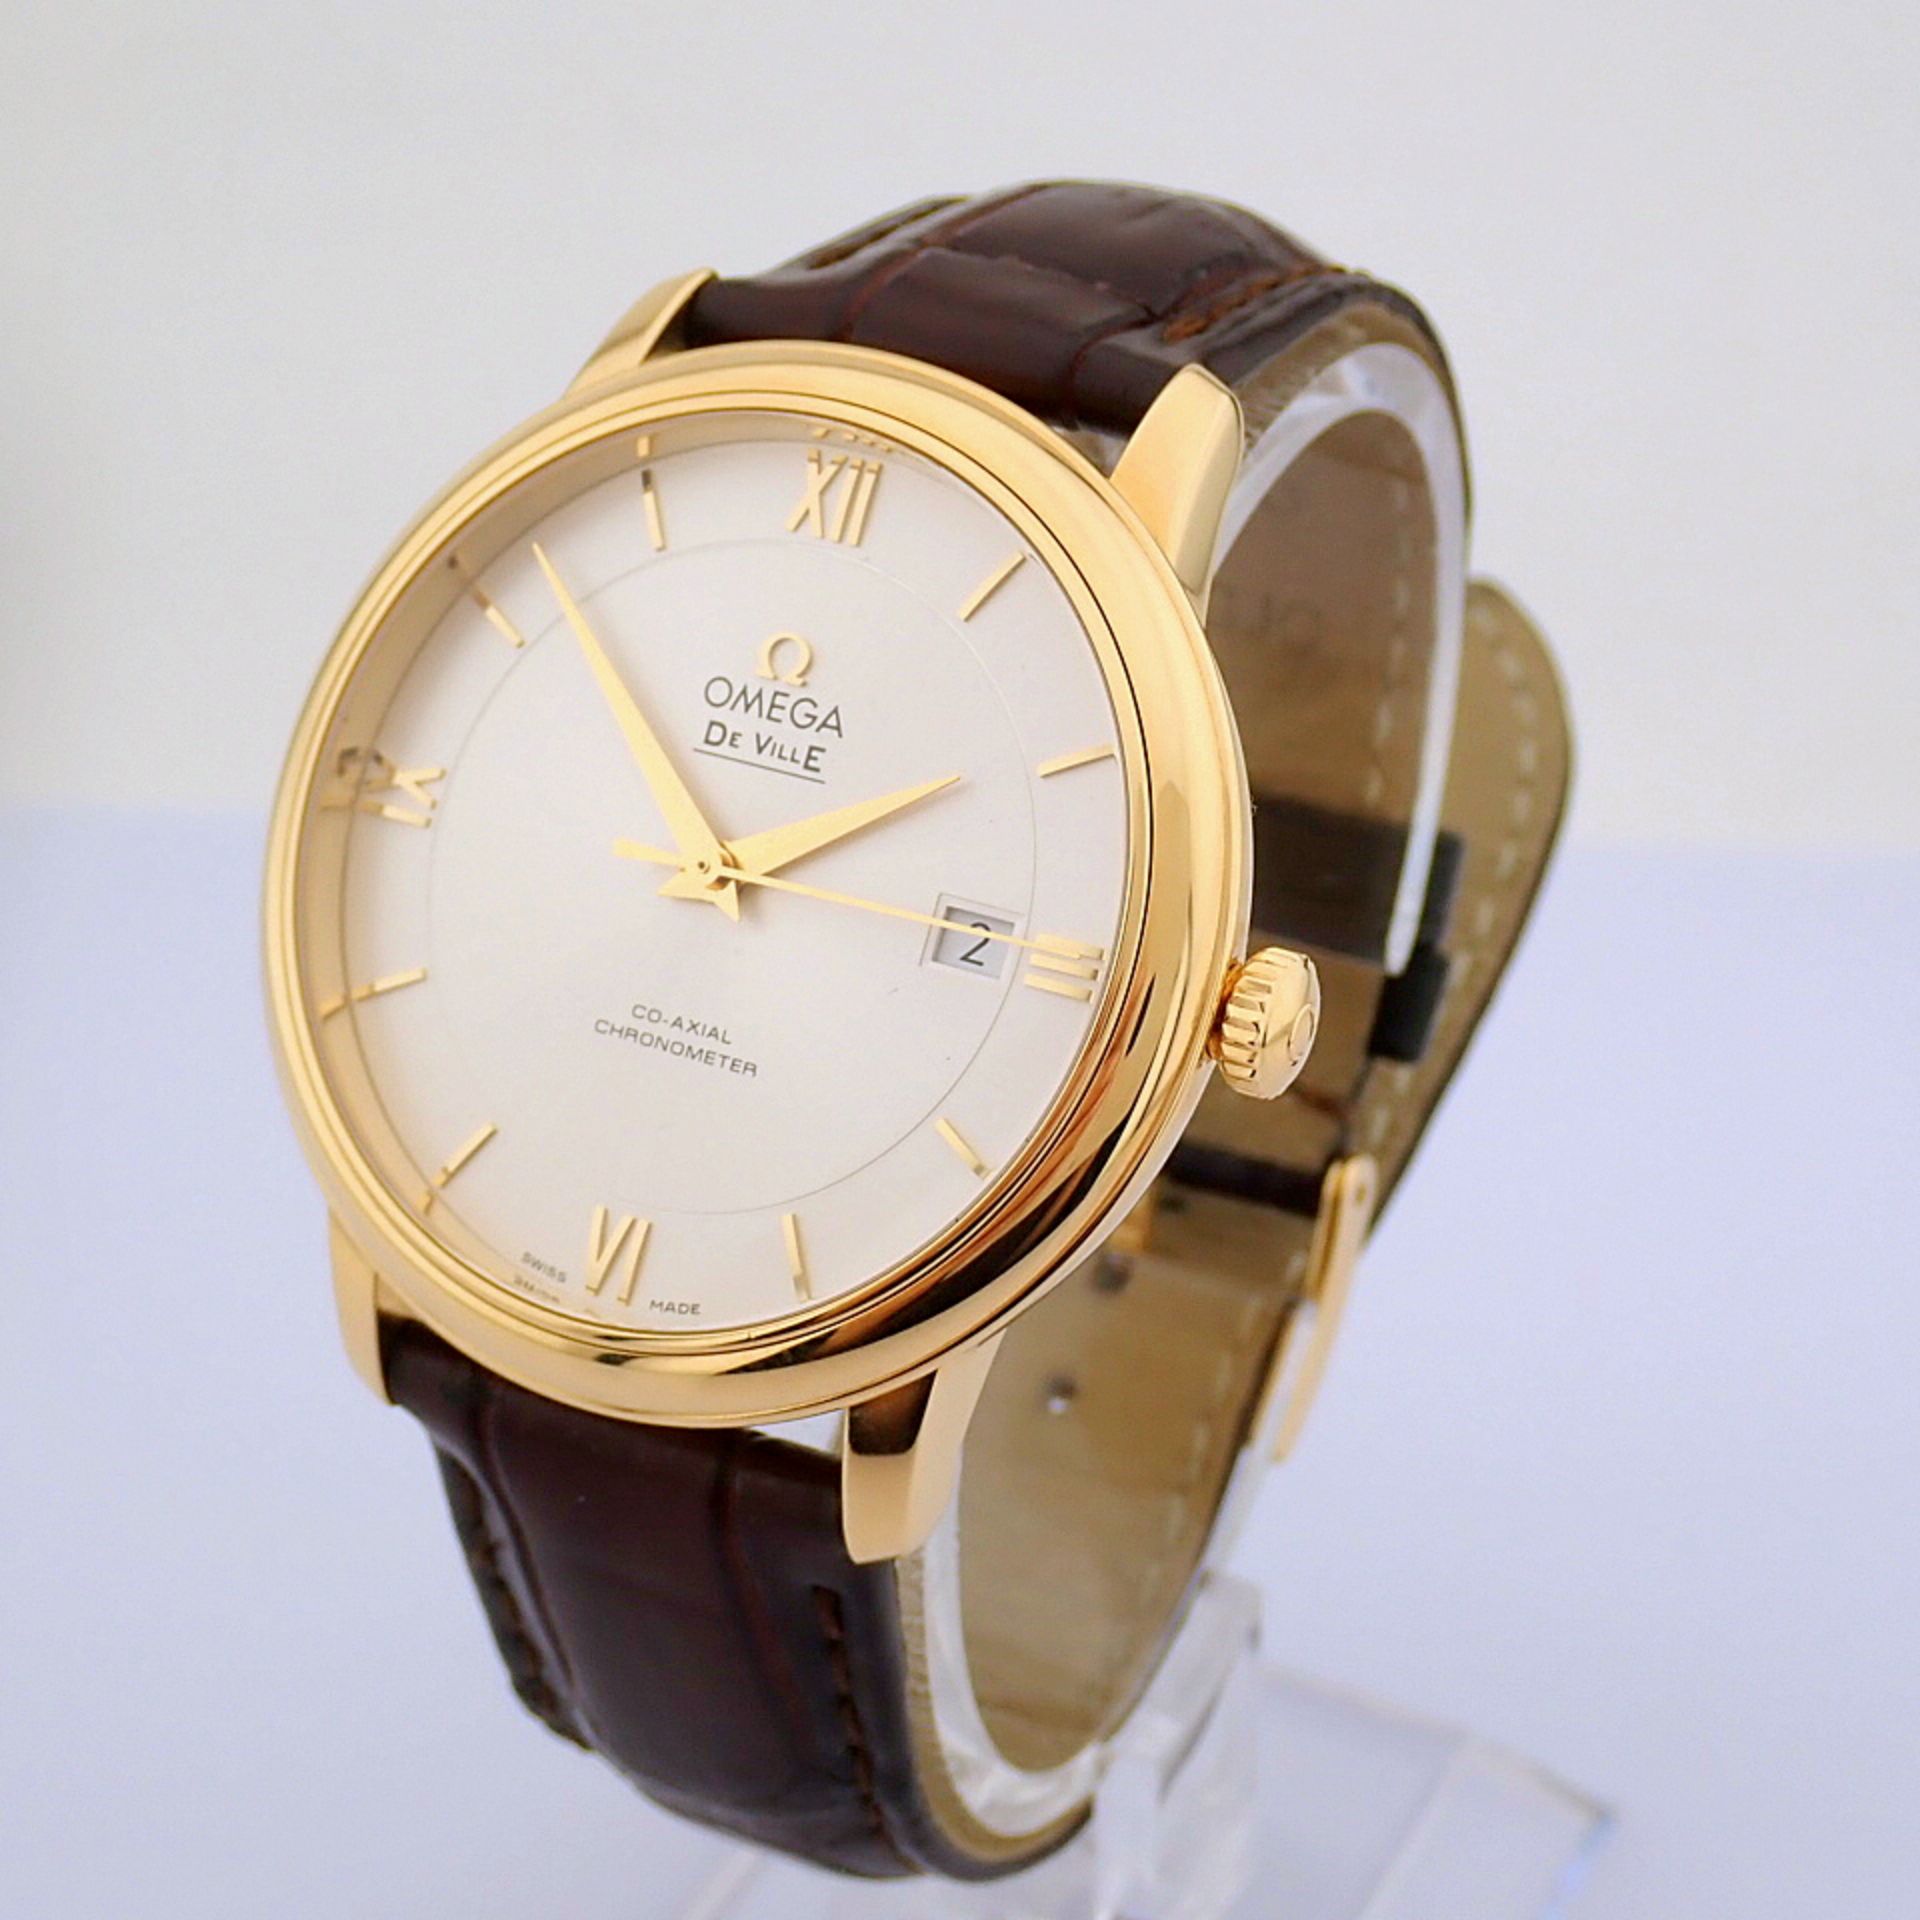 Omega / DE VILLE Prestige 18K Co-Axial Chronometer - Gentlmen's Yellow gold Wrist Watch - Image 3 of 13